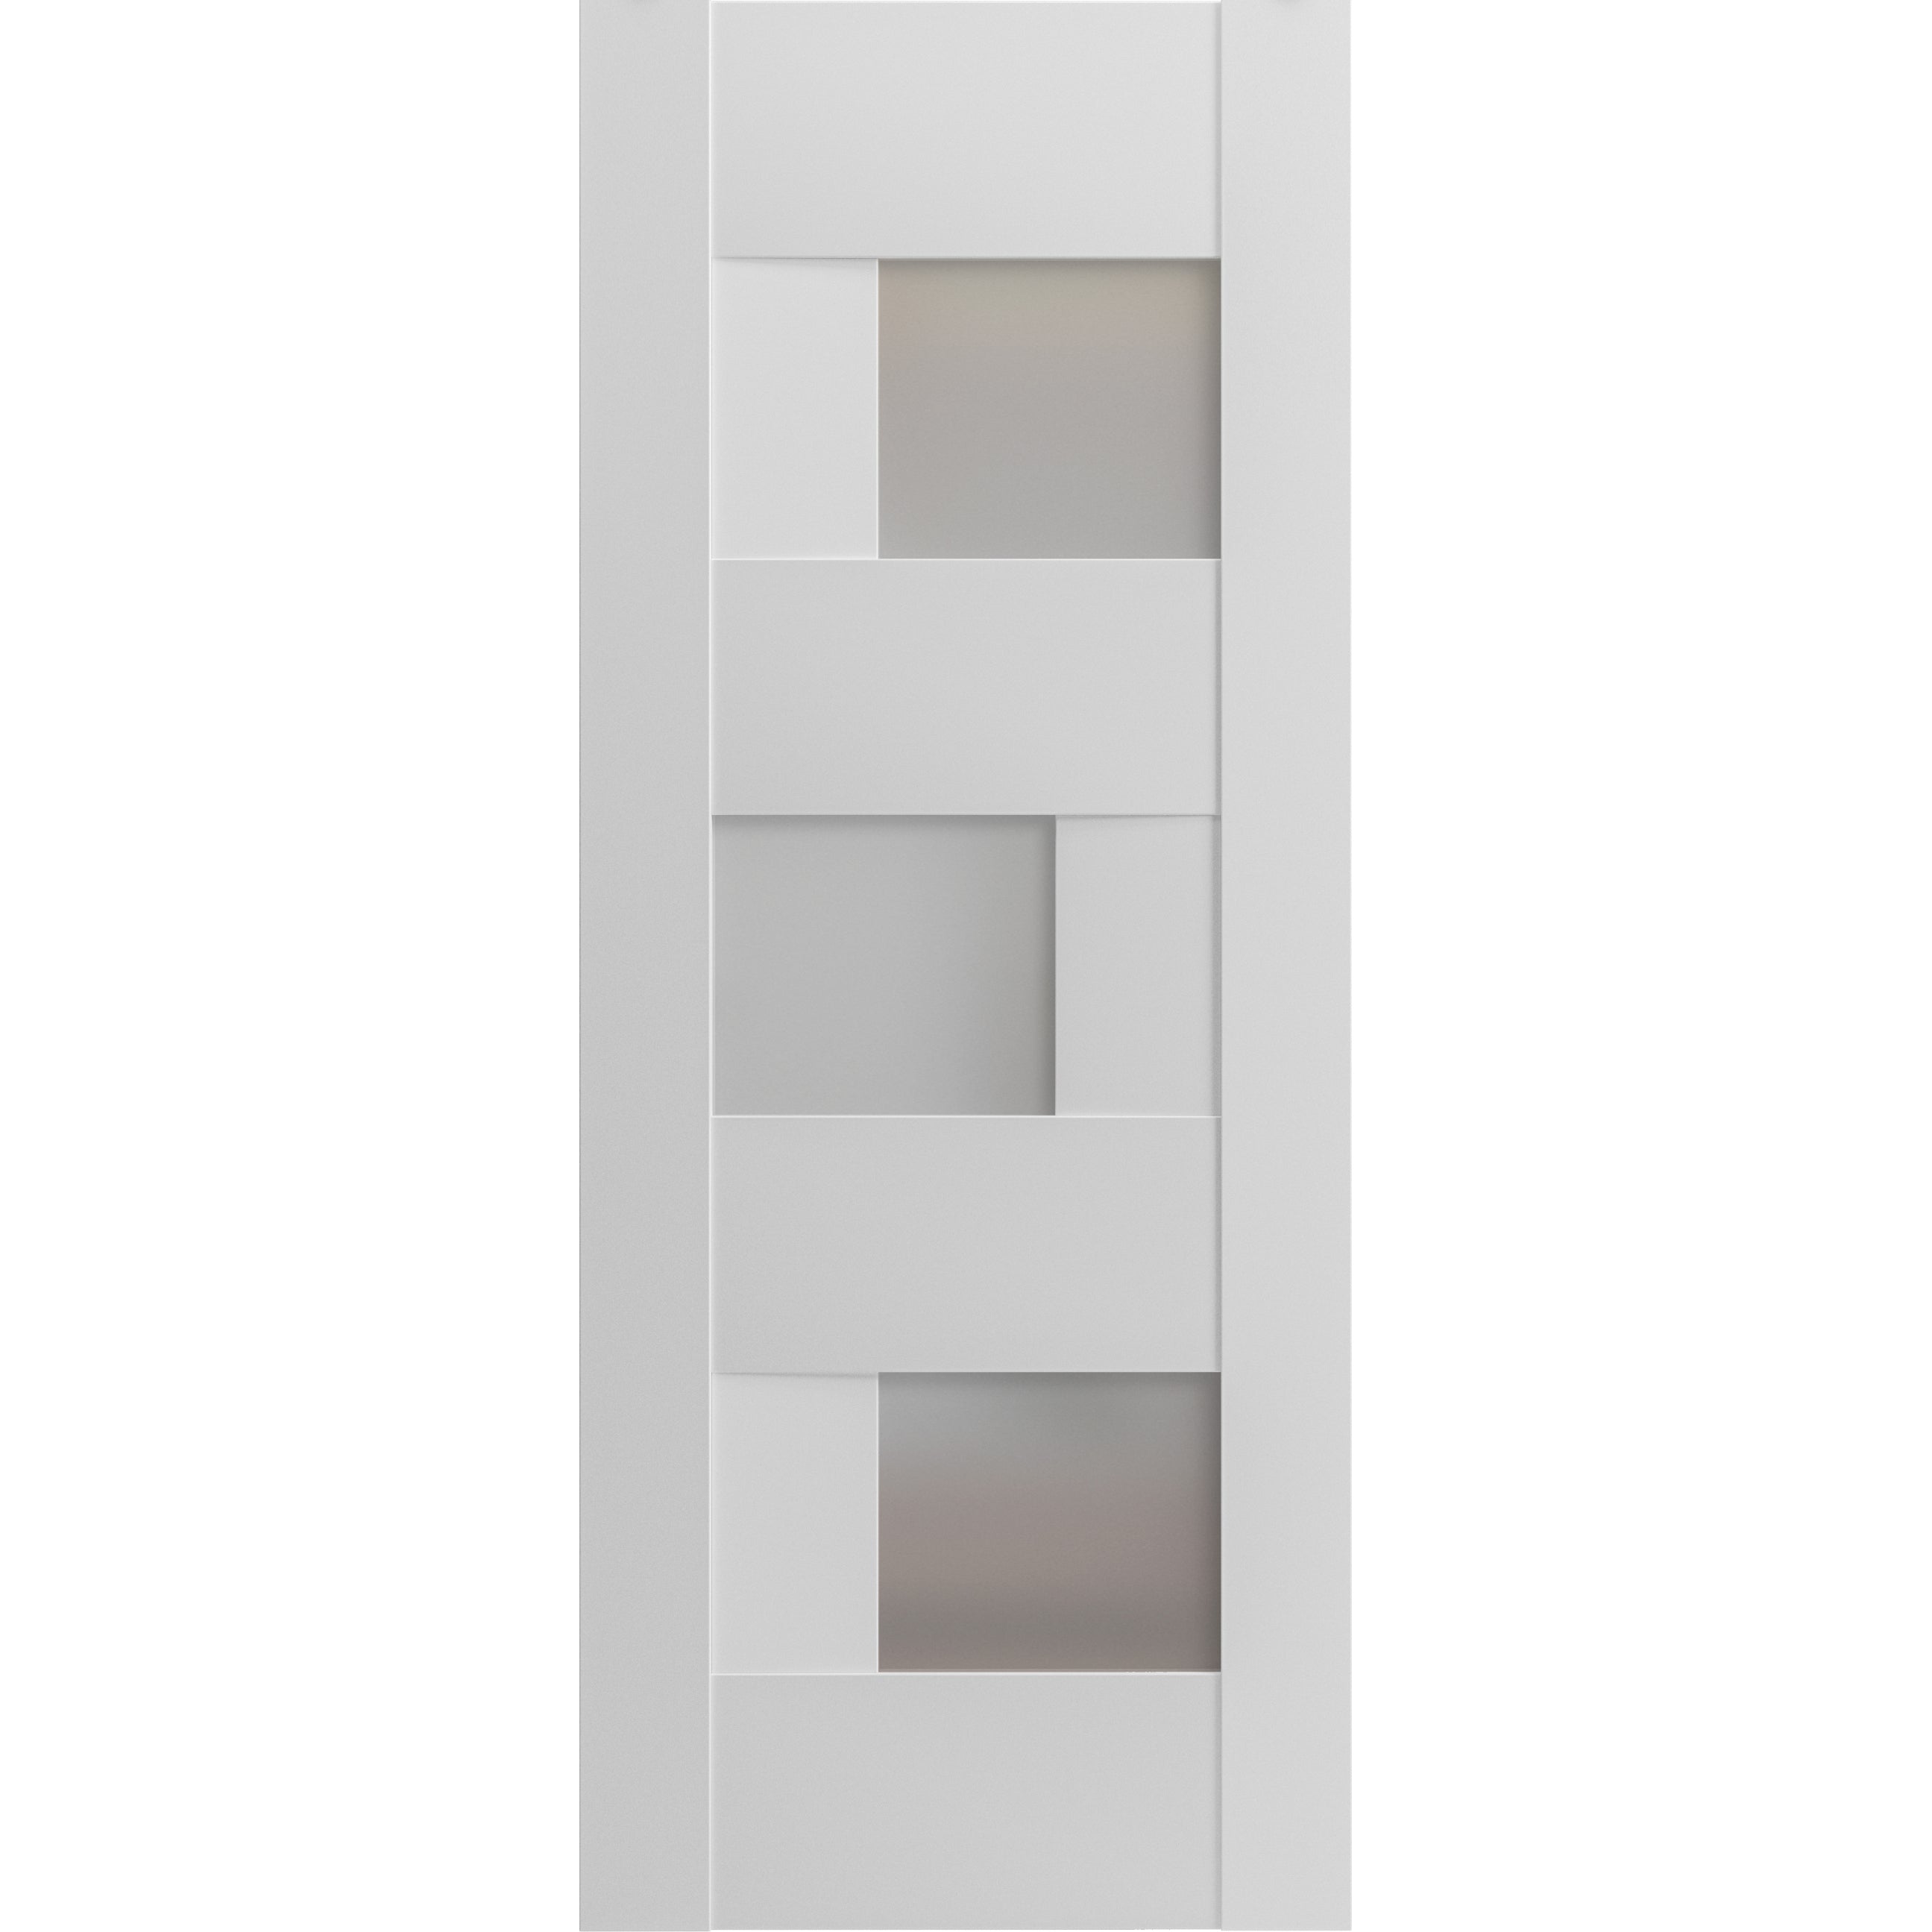 Slab Door Panel Opaque Glass 36 x 96 inches / Sete 6933 White Silk / Modern Finished Doors / Pocket Closet Sliding Barn